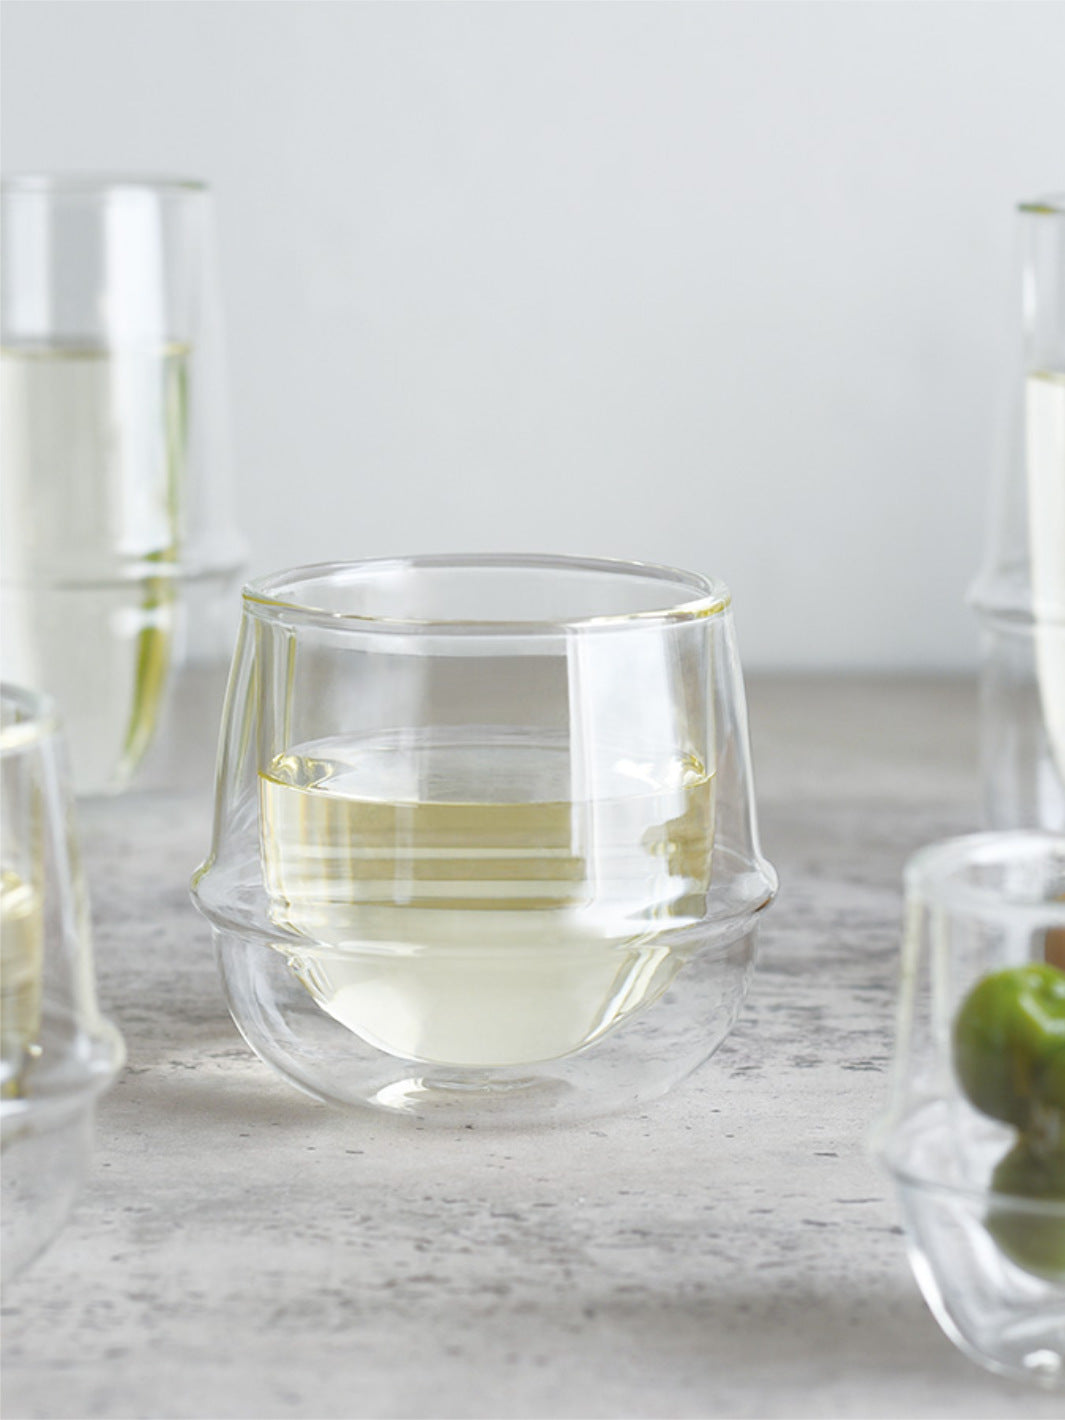 KINTO KRONOS Double Wall Wine Glass (250ml/8.5oz)